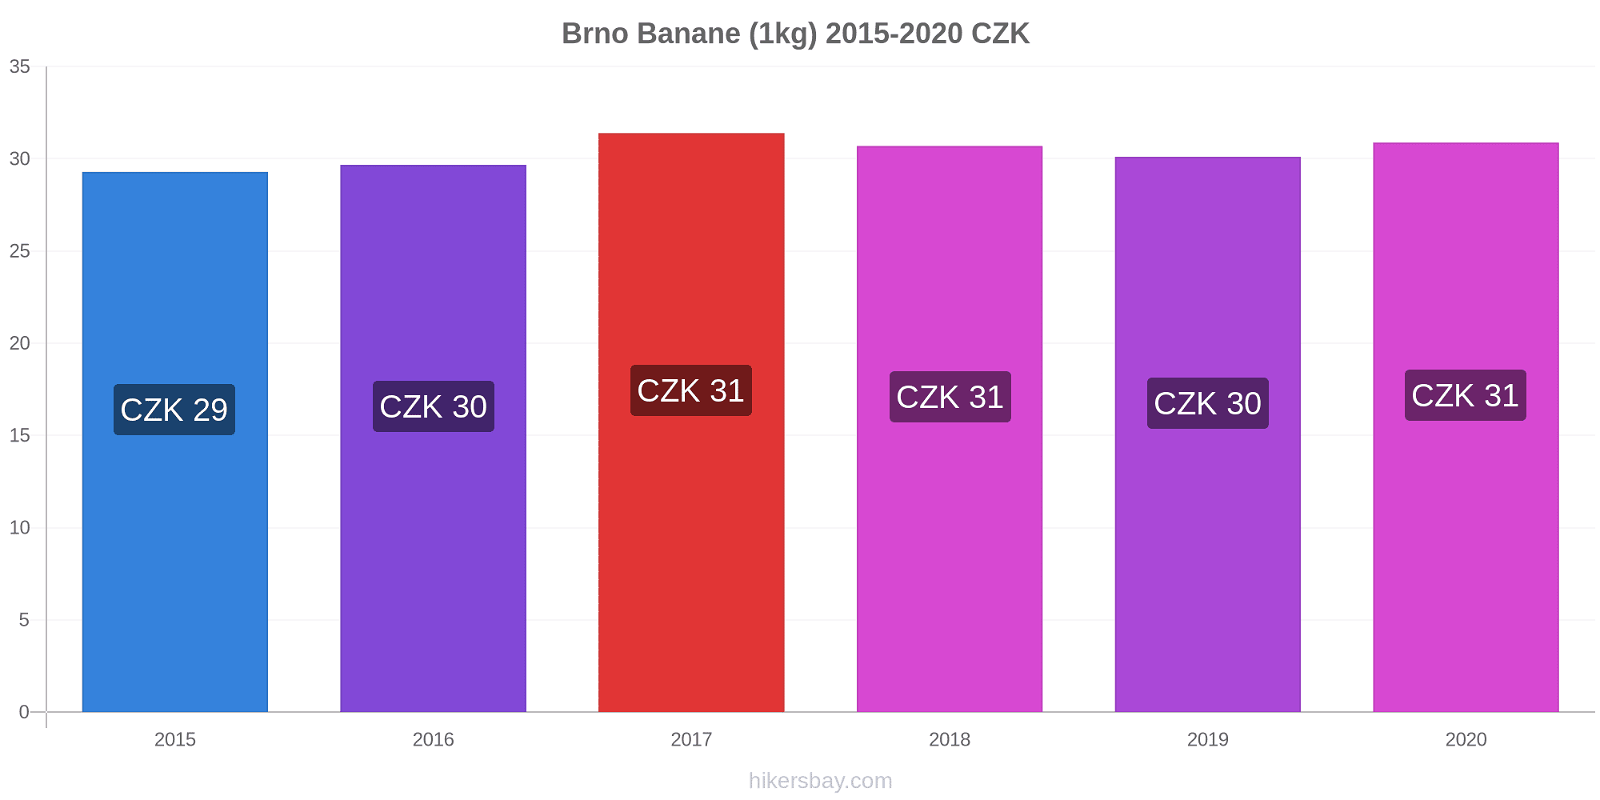 Brno variazioni di prezzo Banana (1kg) hikersbay.com